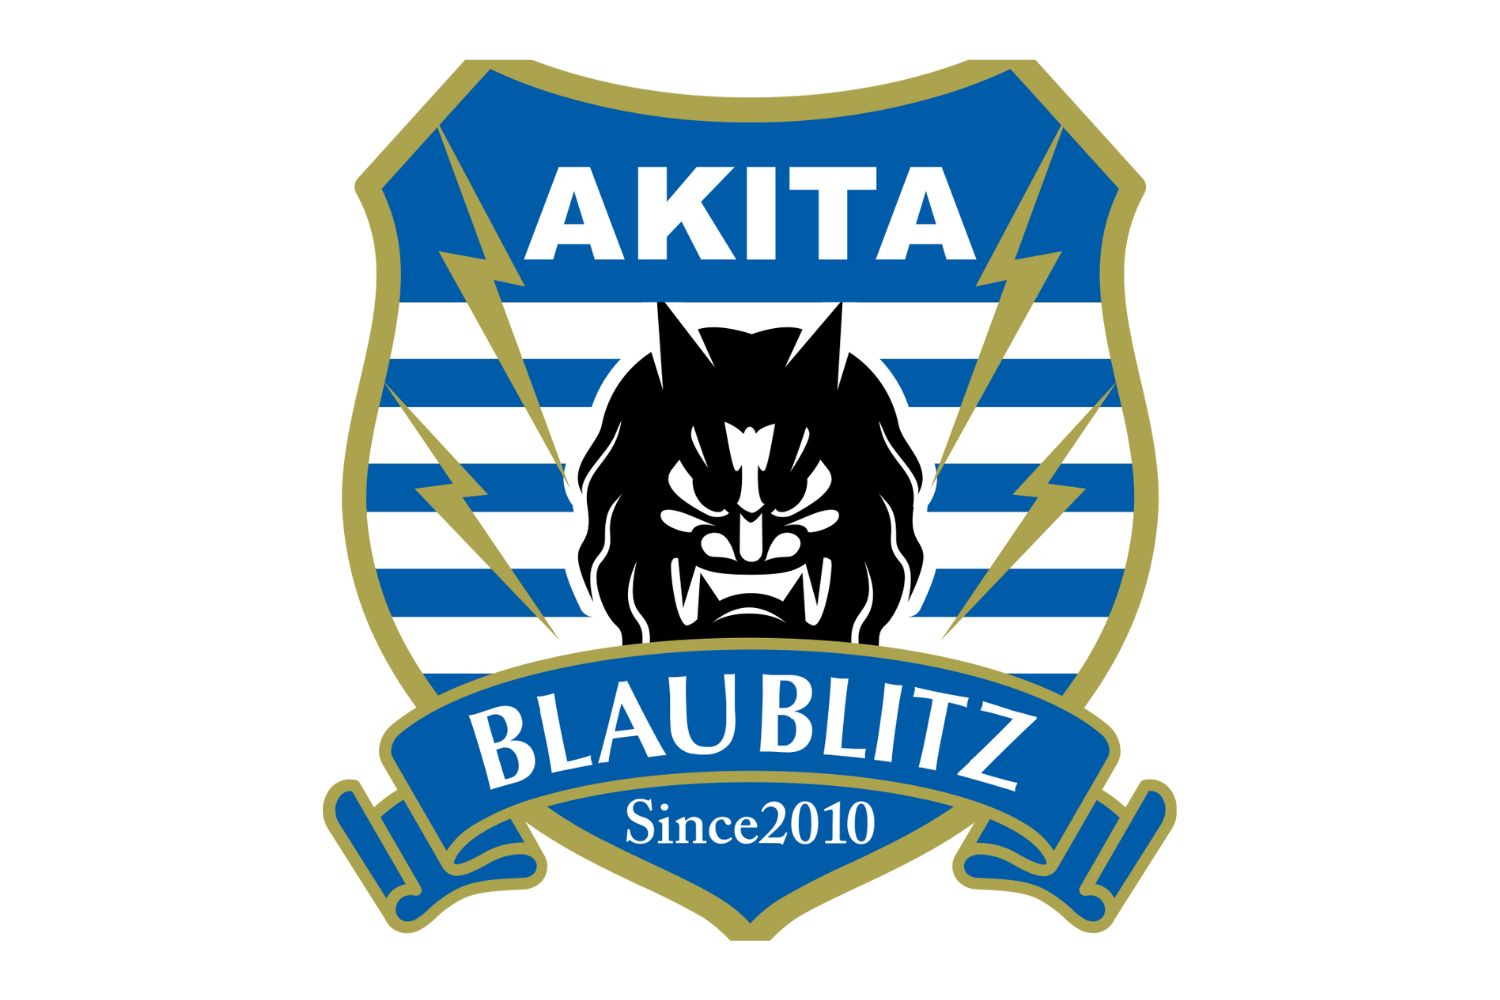 blaublitz-akita-22-football-club-facts